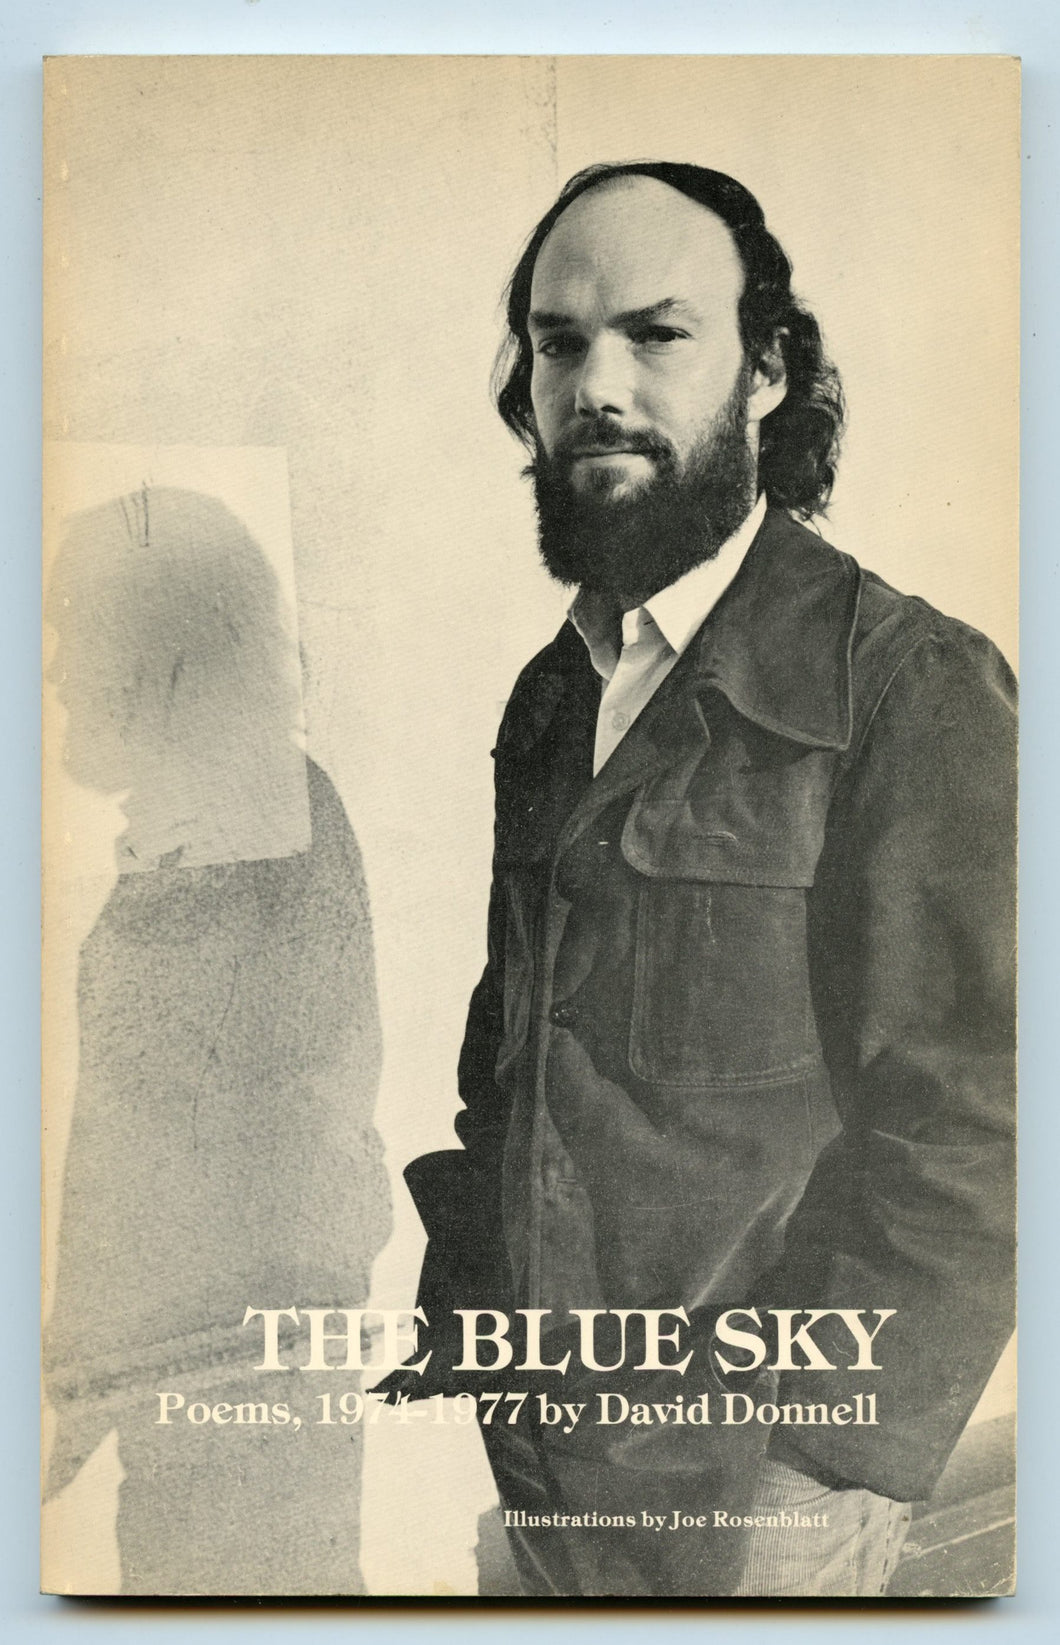 The Blue Sky: Poems, 1974-1977